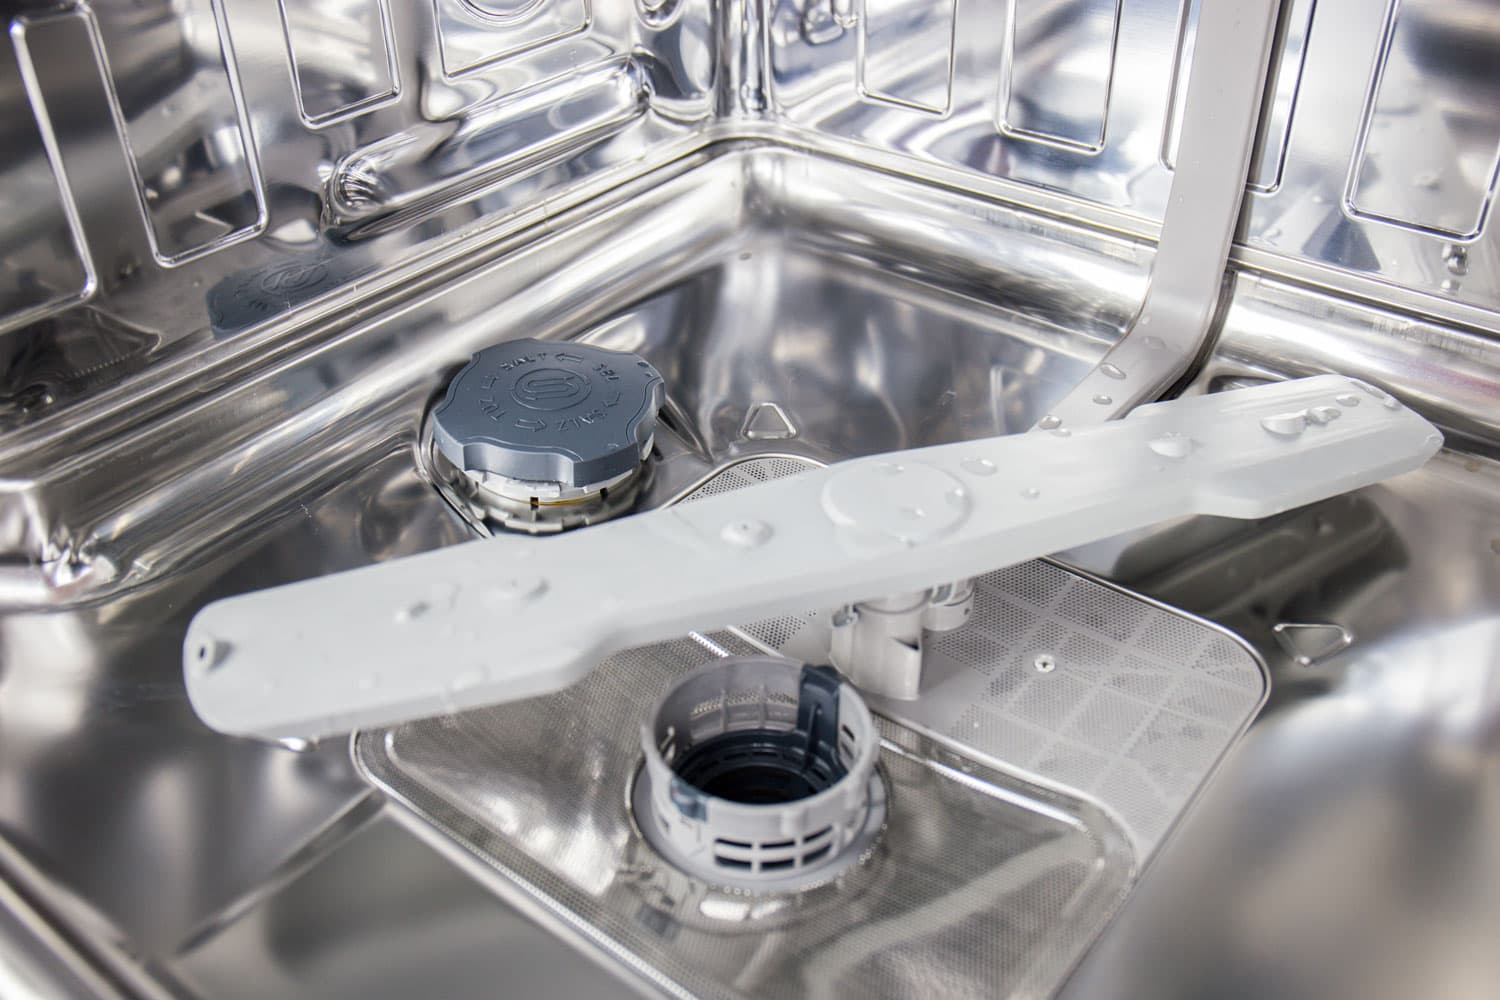 Interior of a dishwasher 